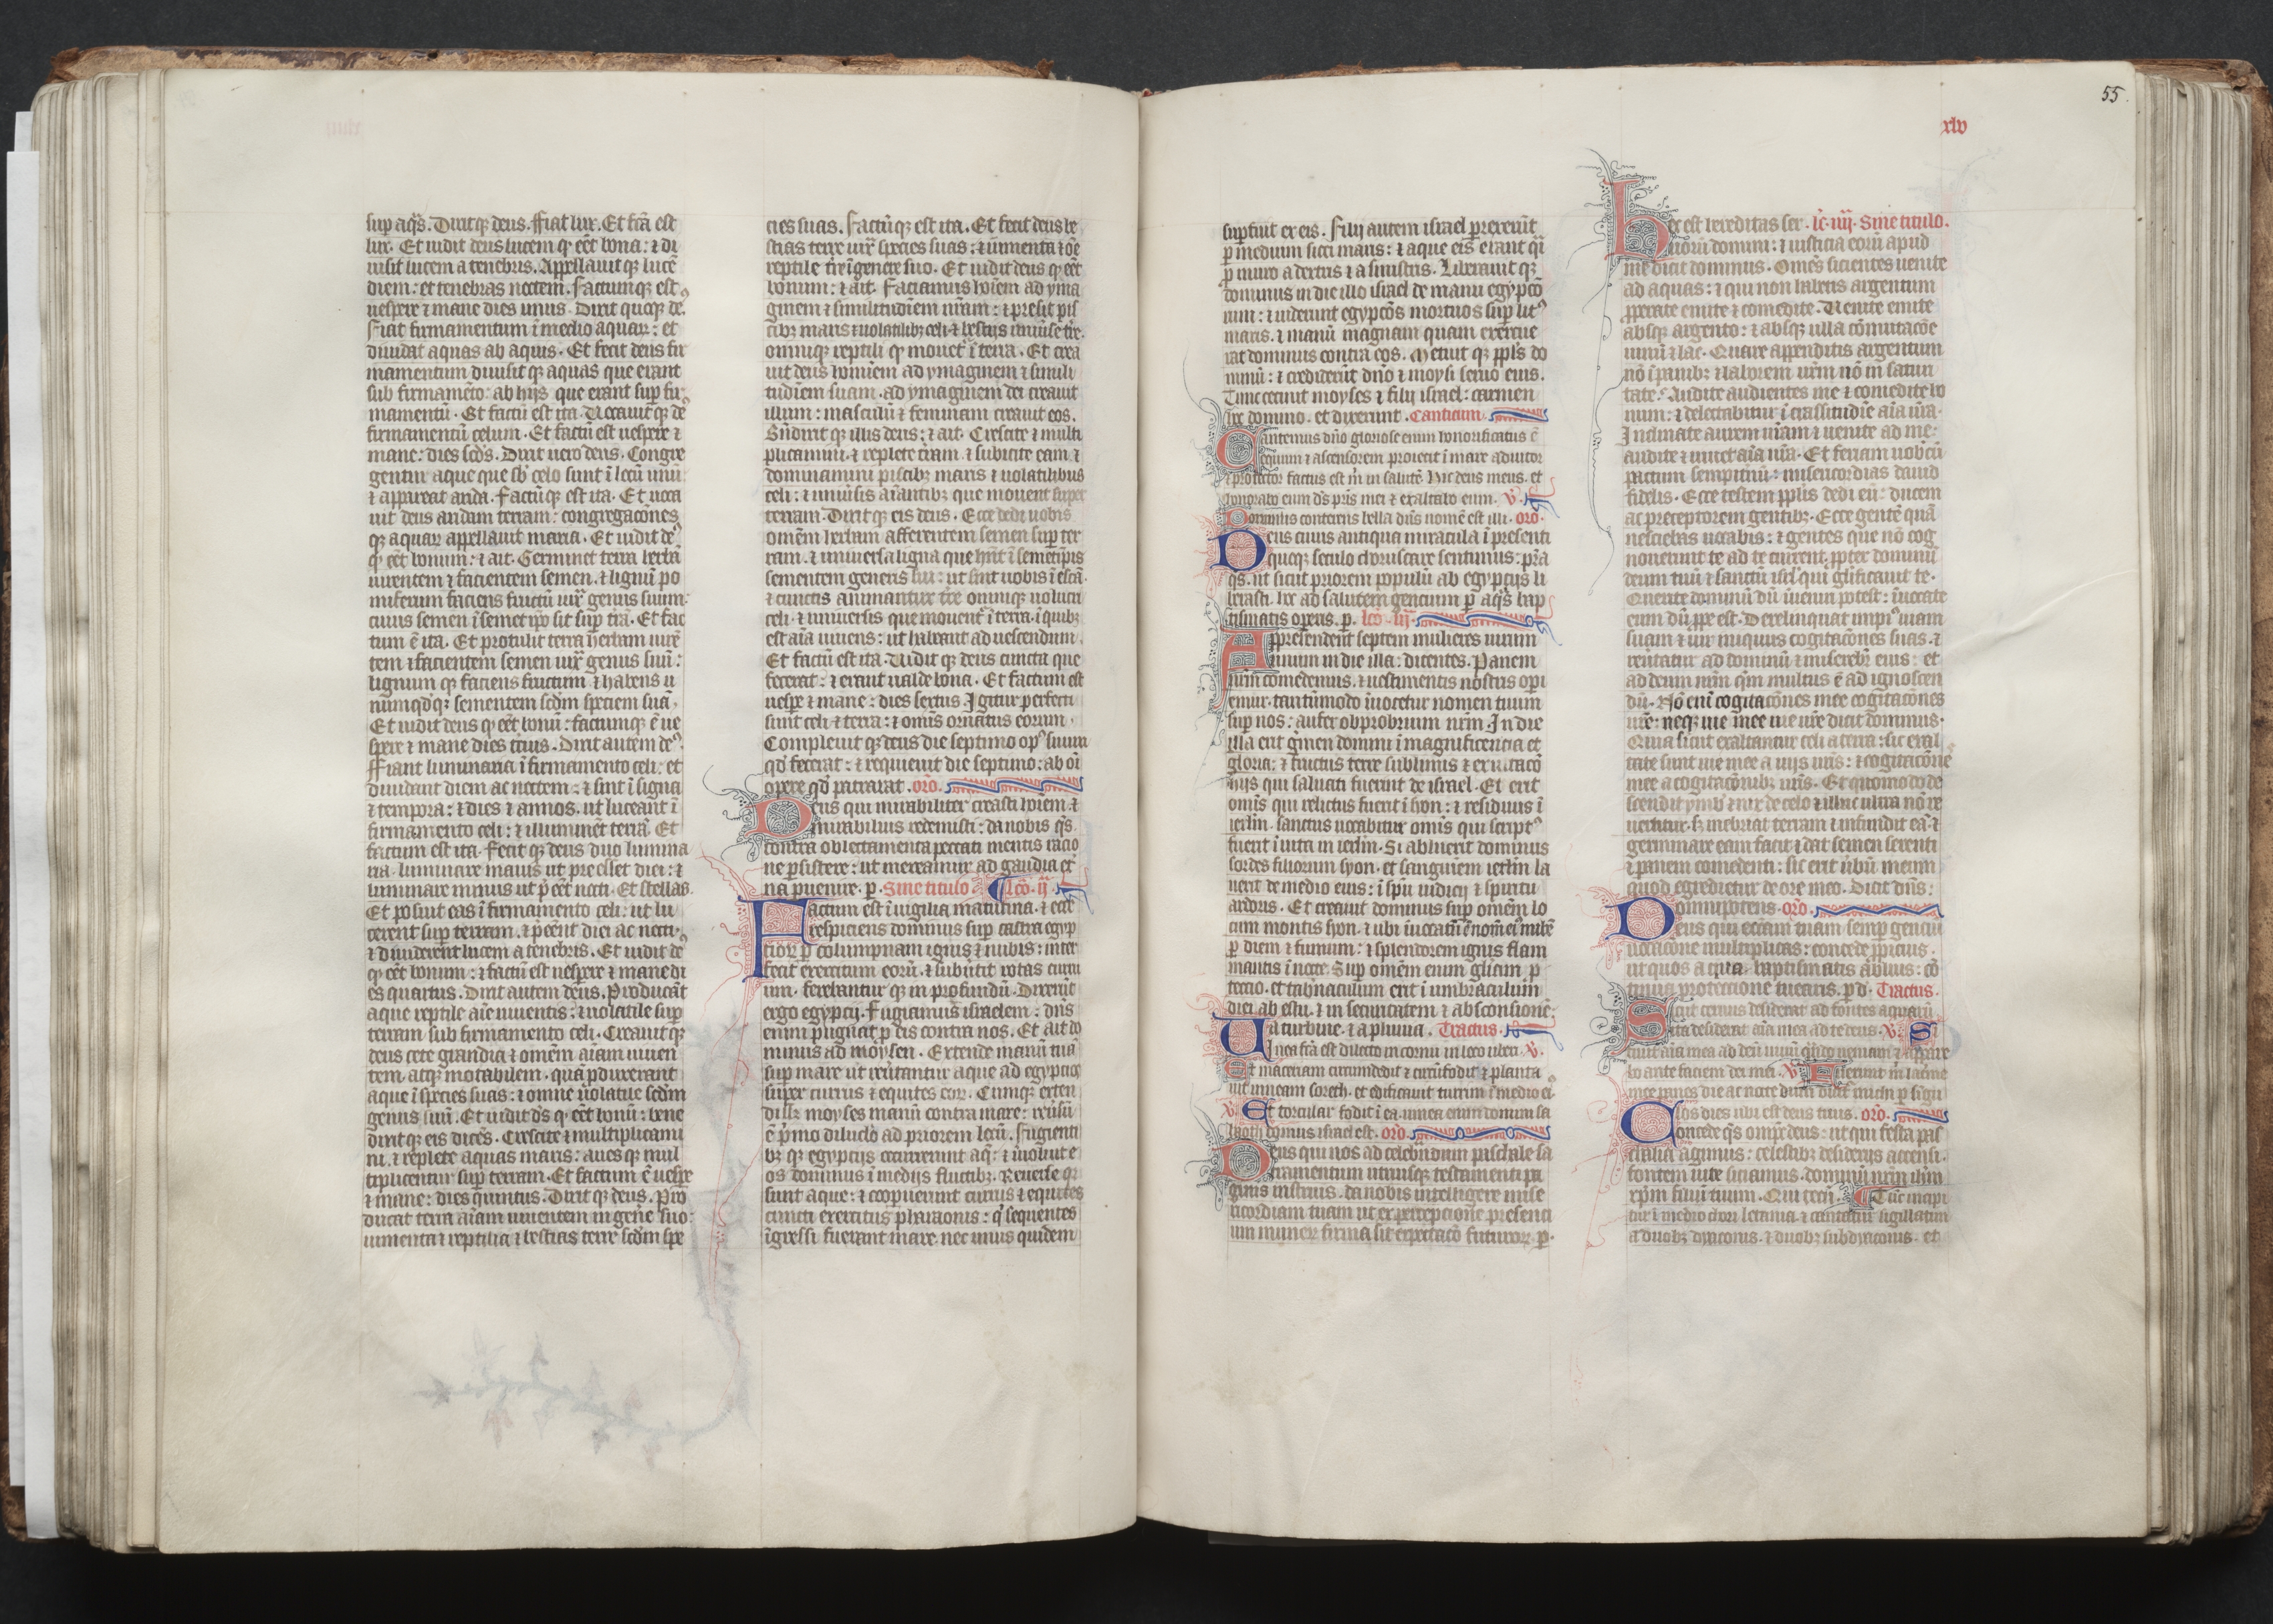 The Gotha Missal:  Fol. 54v, Text